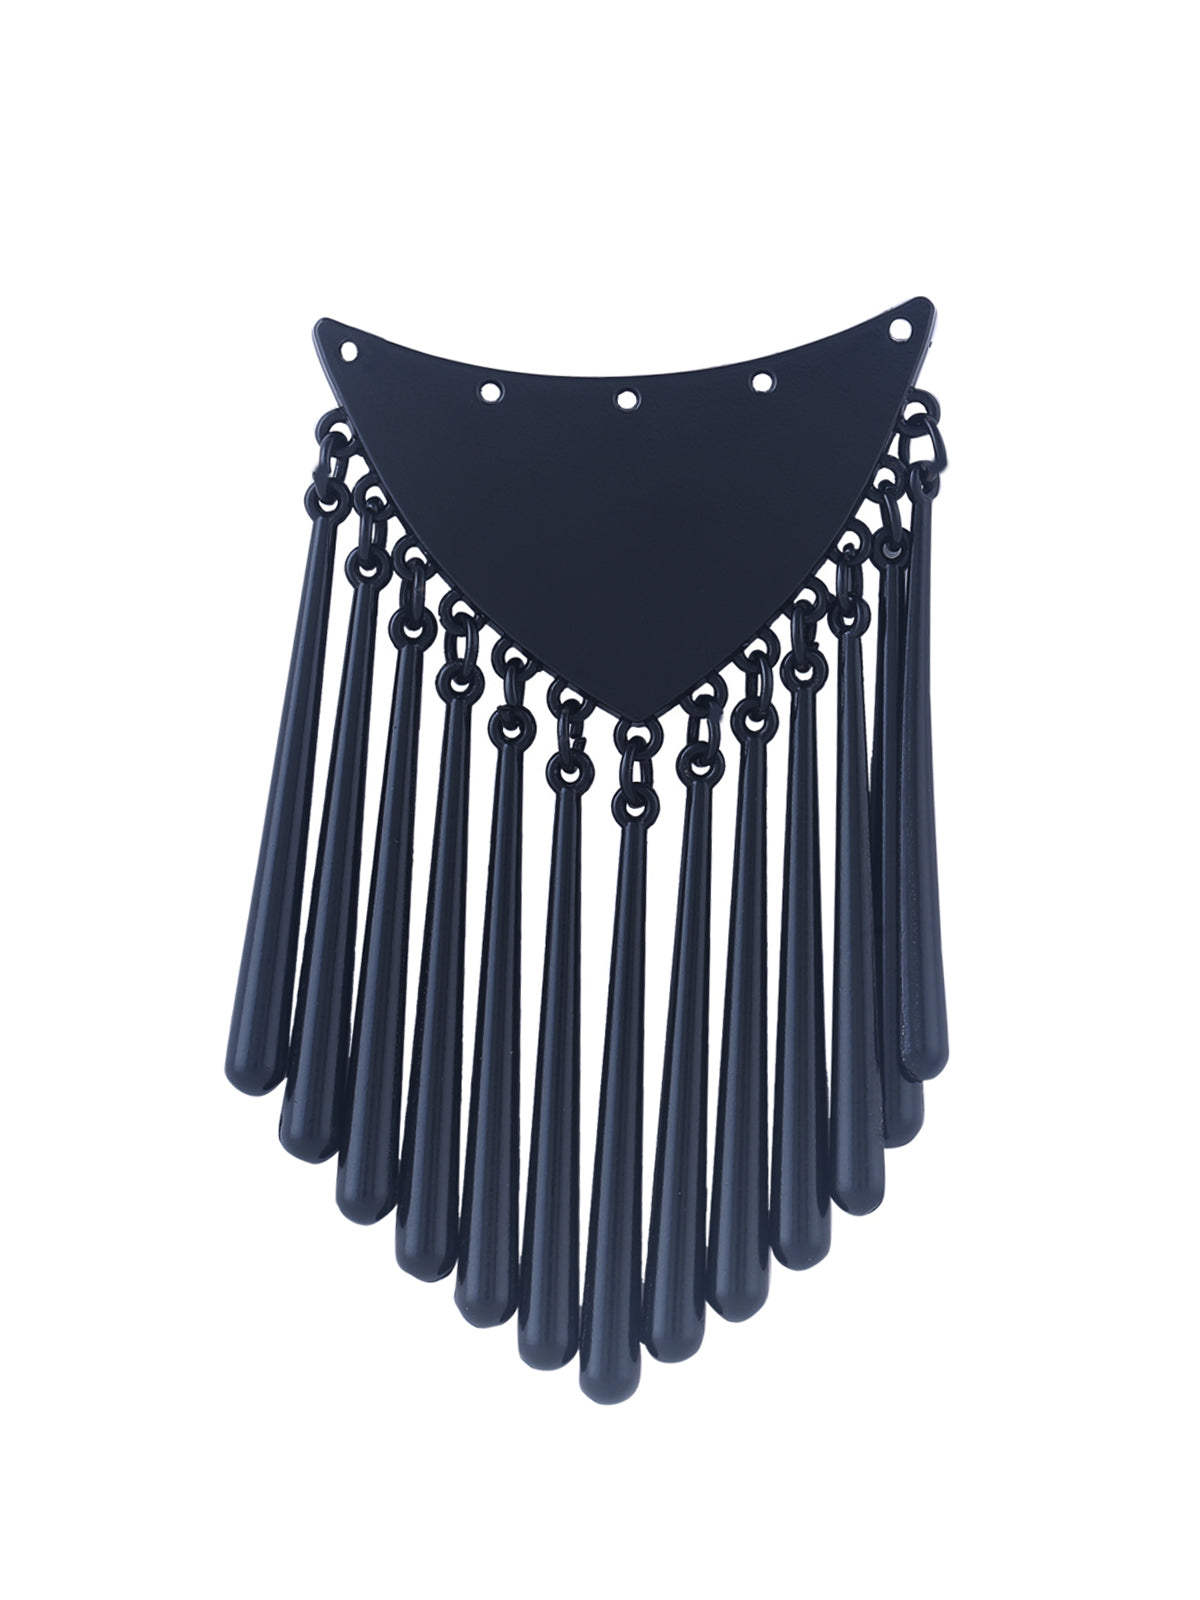 Exquisite Matte Black Finish Tassel Design Neckline